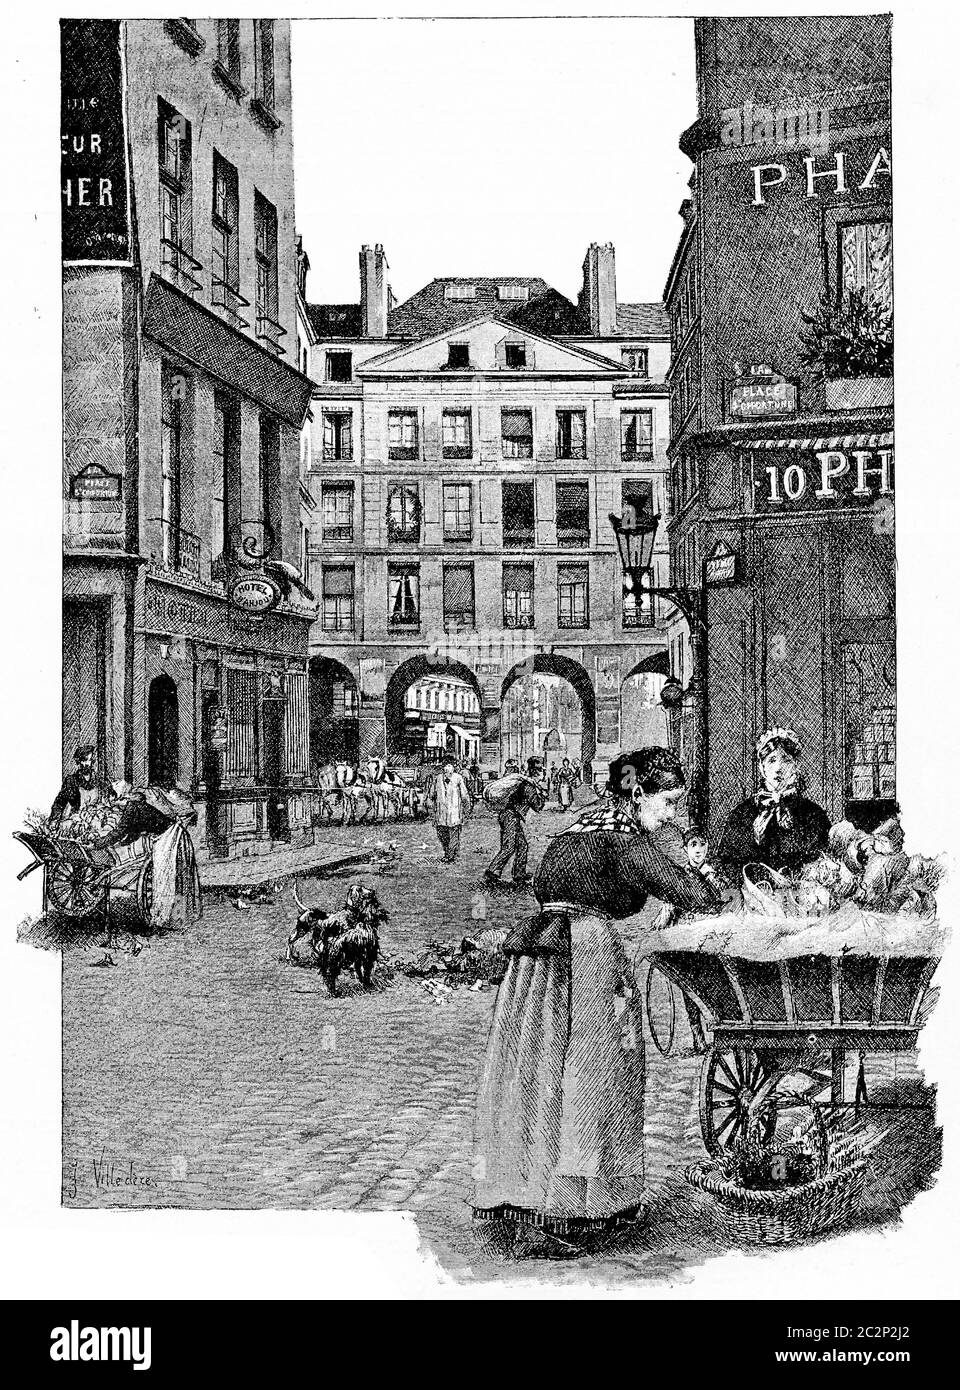 Die Arkaden der rue de la Ferronnerie, Vintage gravierte Illustration. Paris - Auguste VITU – 1890. Stockfoto